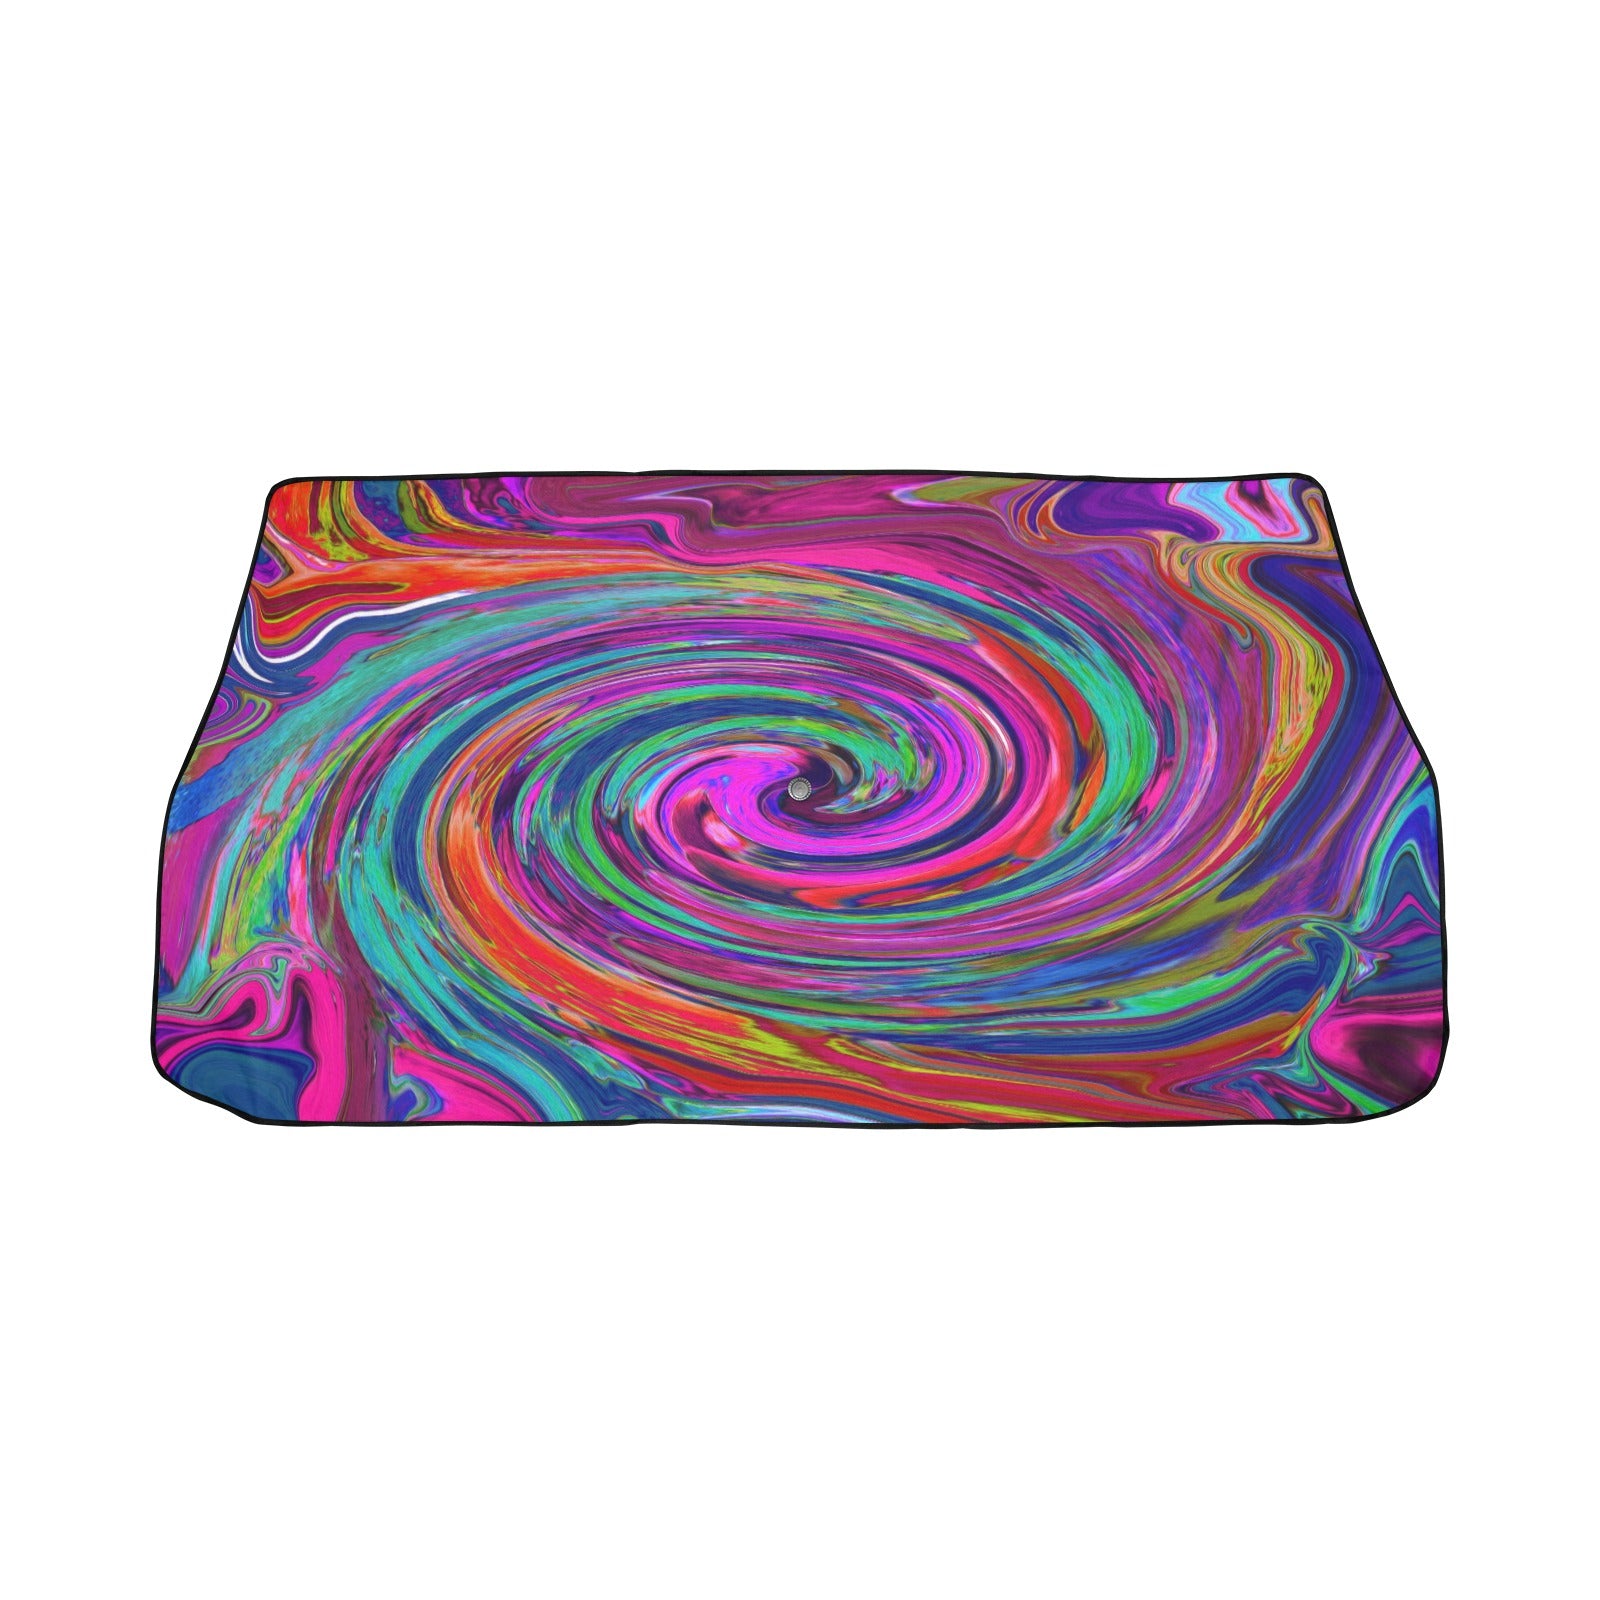 Car Umbrella Sunshades, Groovy Abstract Retro Magenta Dark Rainbow Swirl